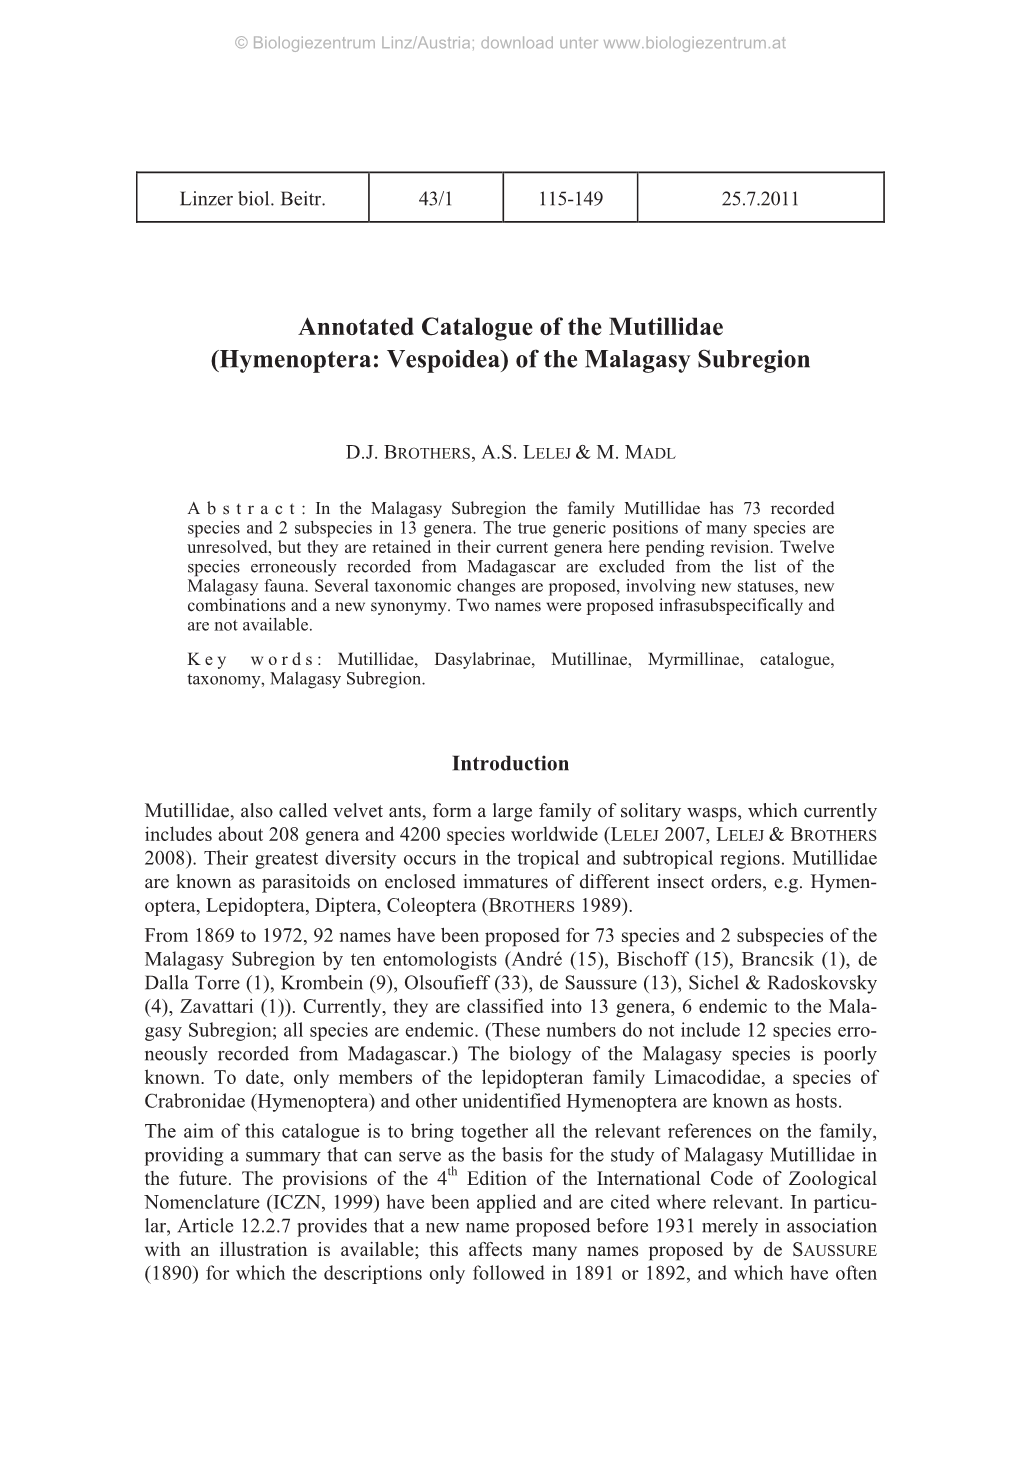 Annotated Catalogue of the Mutillidae (Hymenoptera: Vespoidea) of the Malagasy Subregion